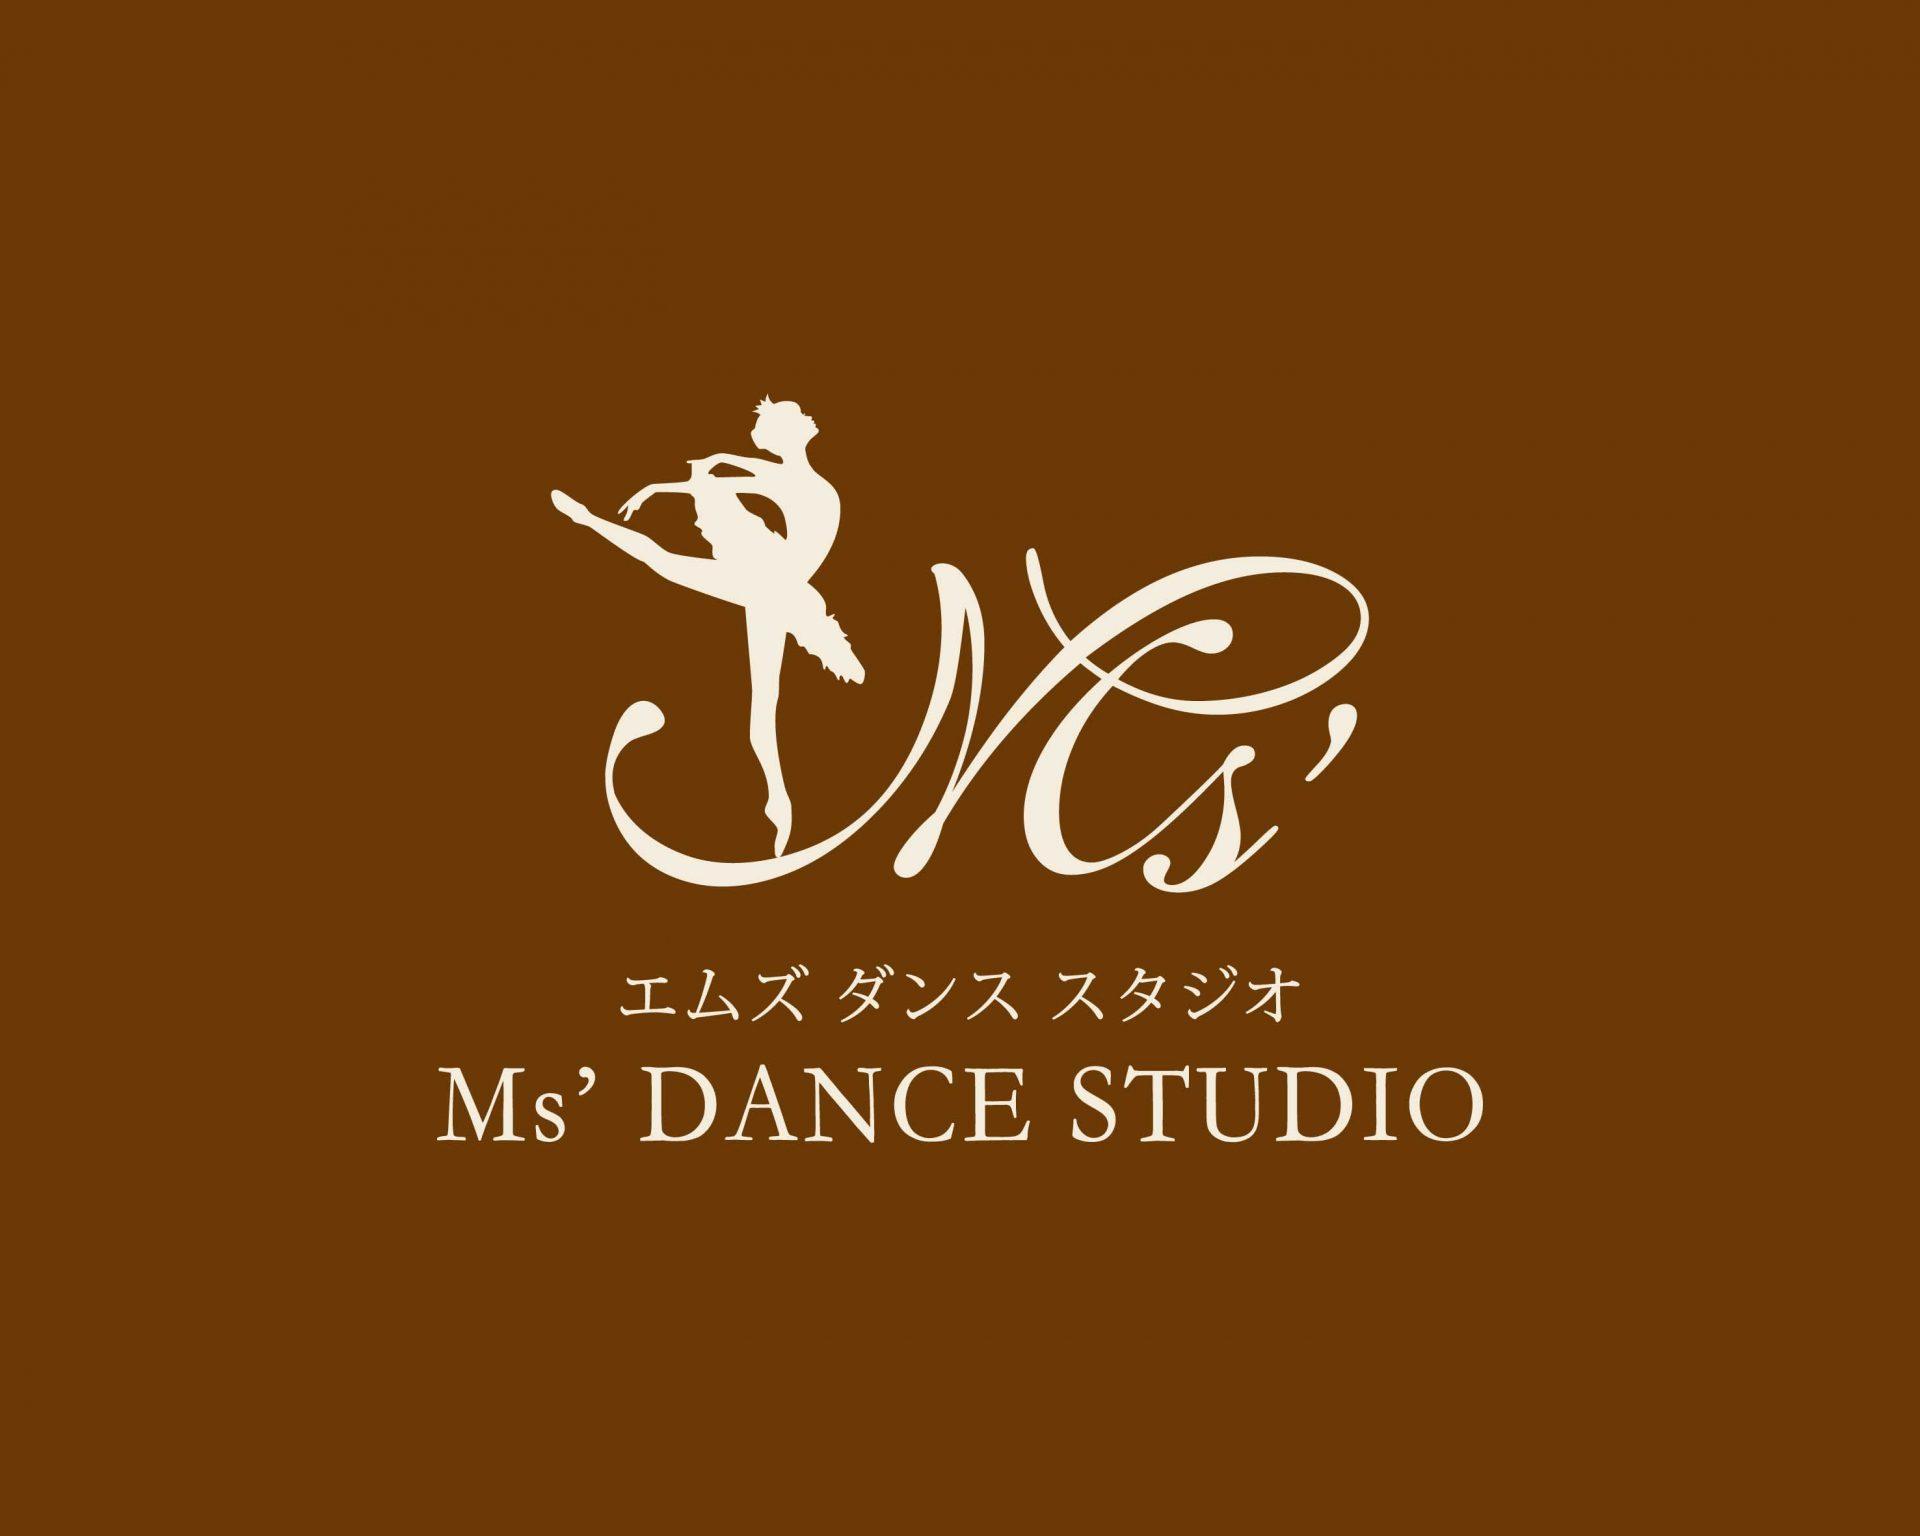 Ms' DANCE STUDIO